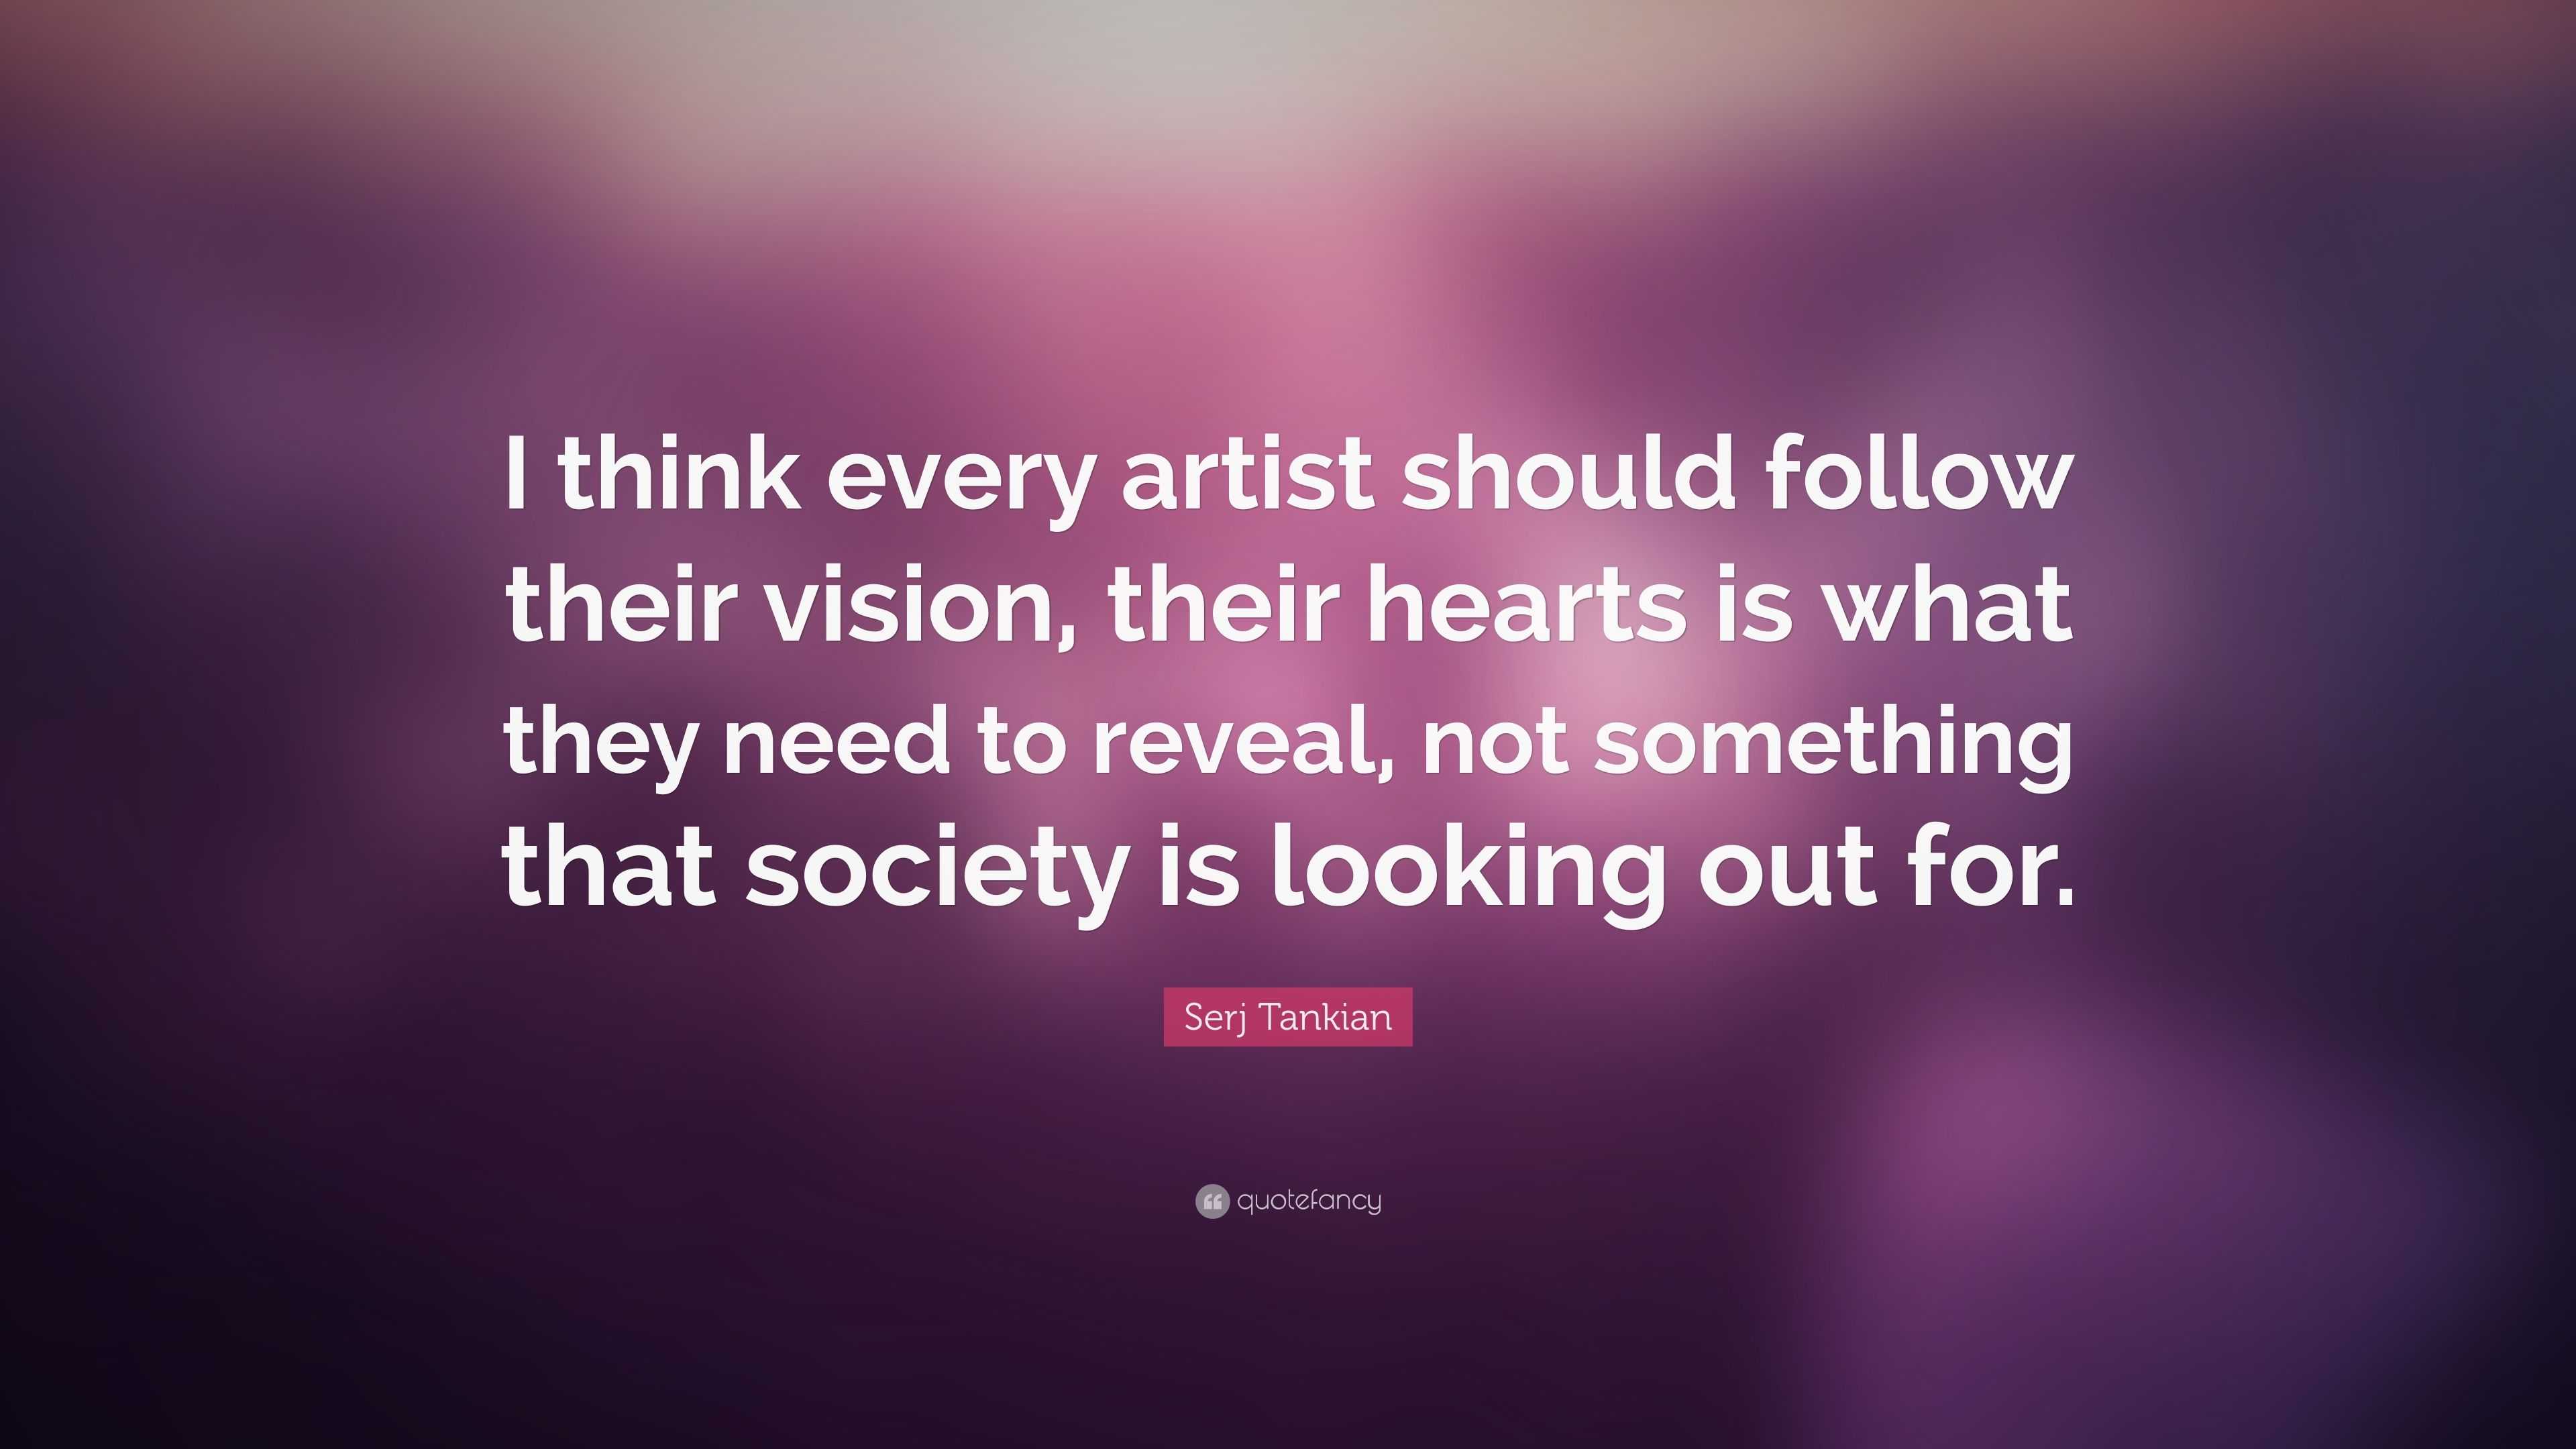 Serj Tankian Quote: “I think every artist should follow their vision ...